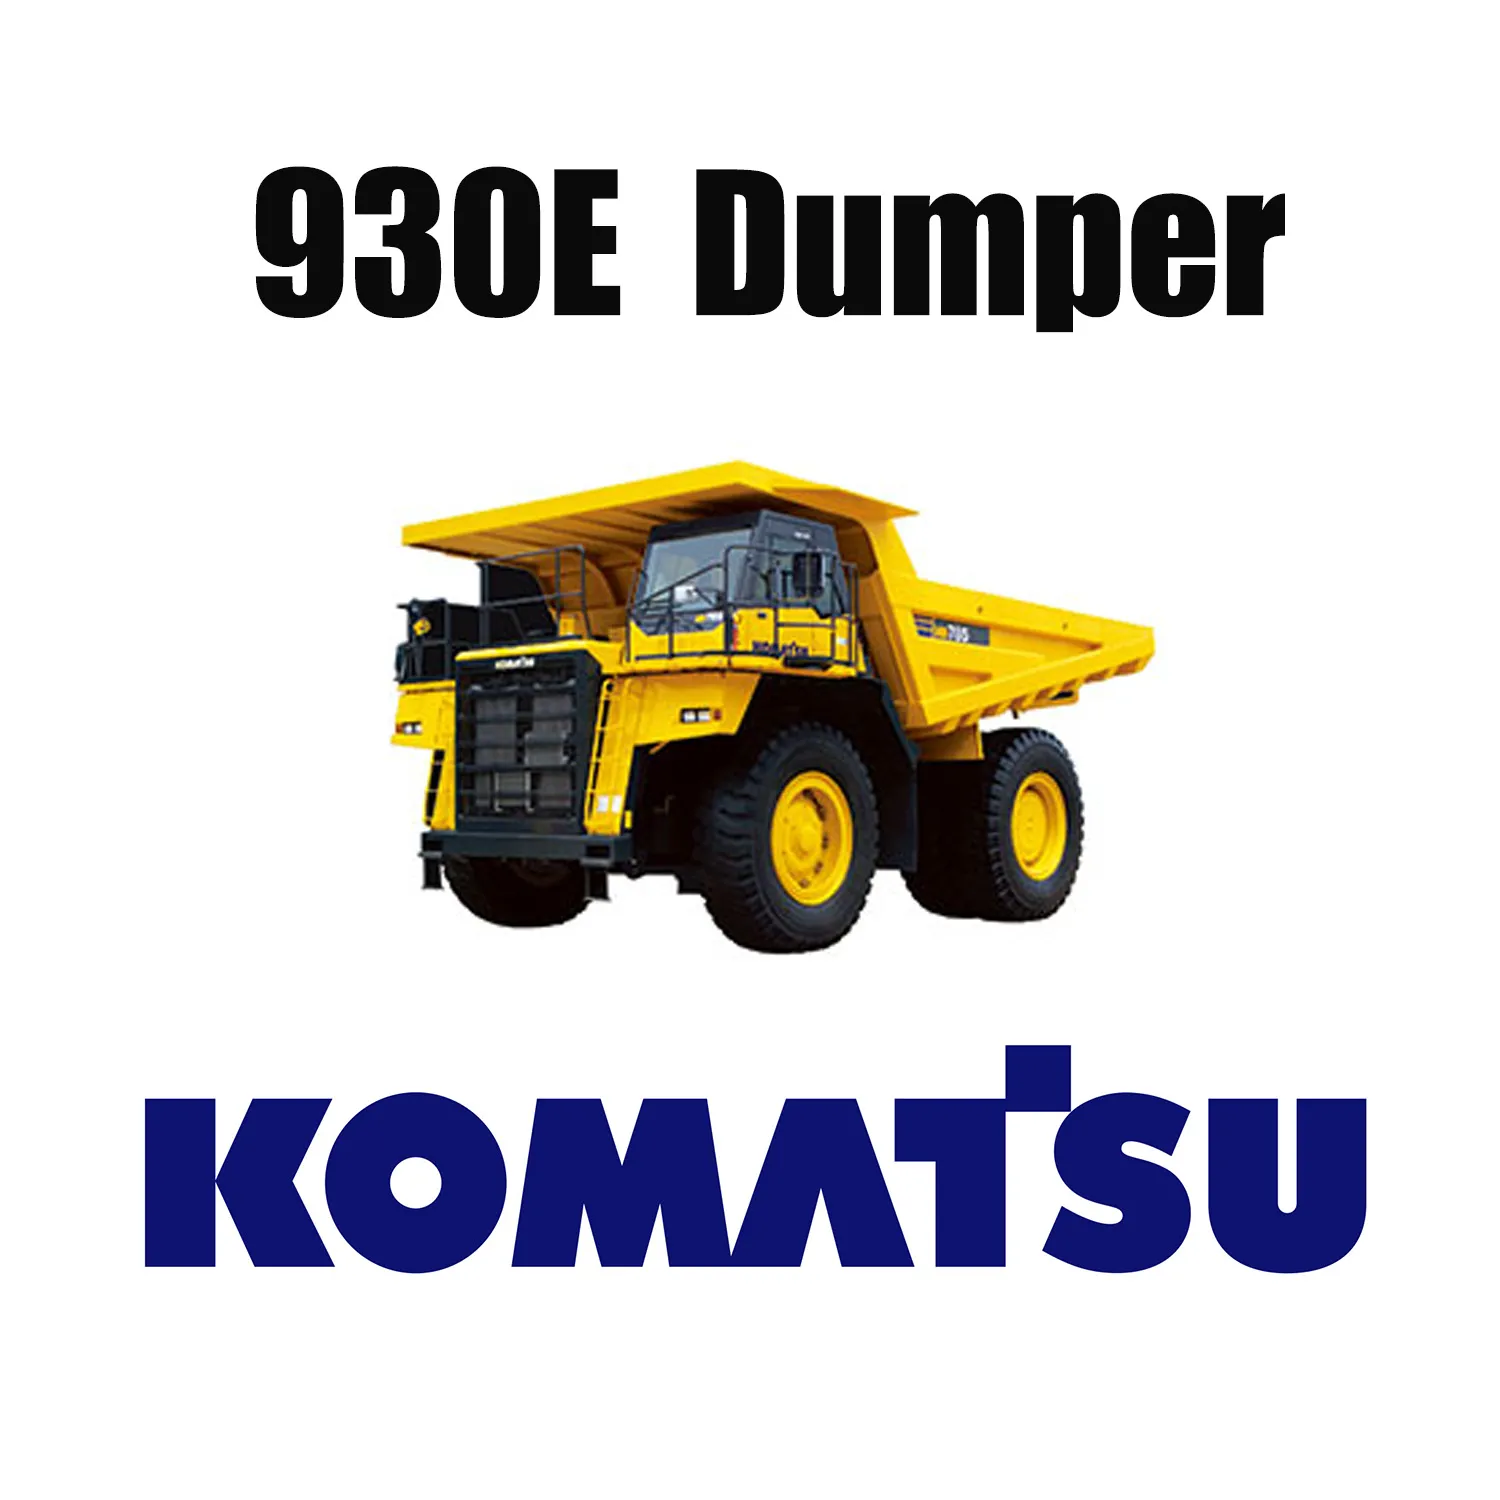 53/80R63 Off-the-Road Surface Mining-Reifen beantragt für KOMATSU 930E